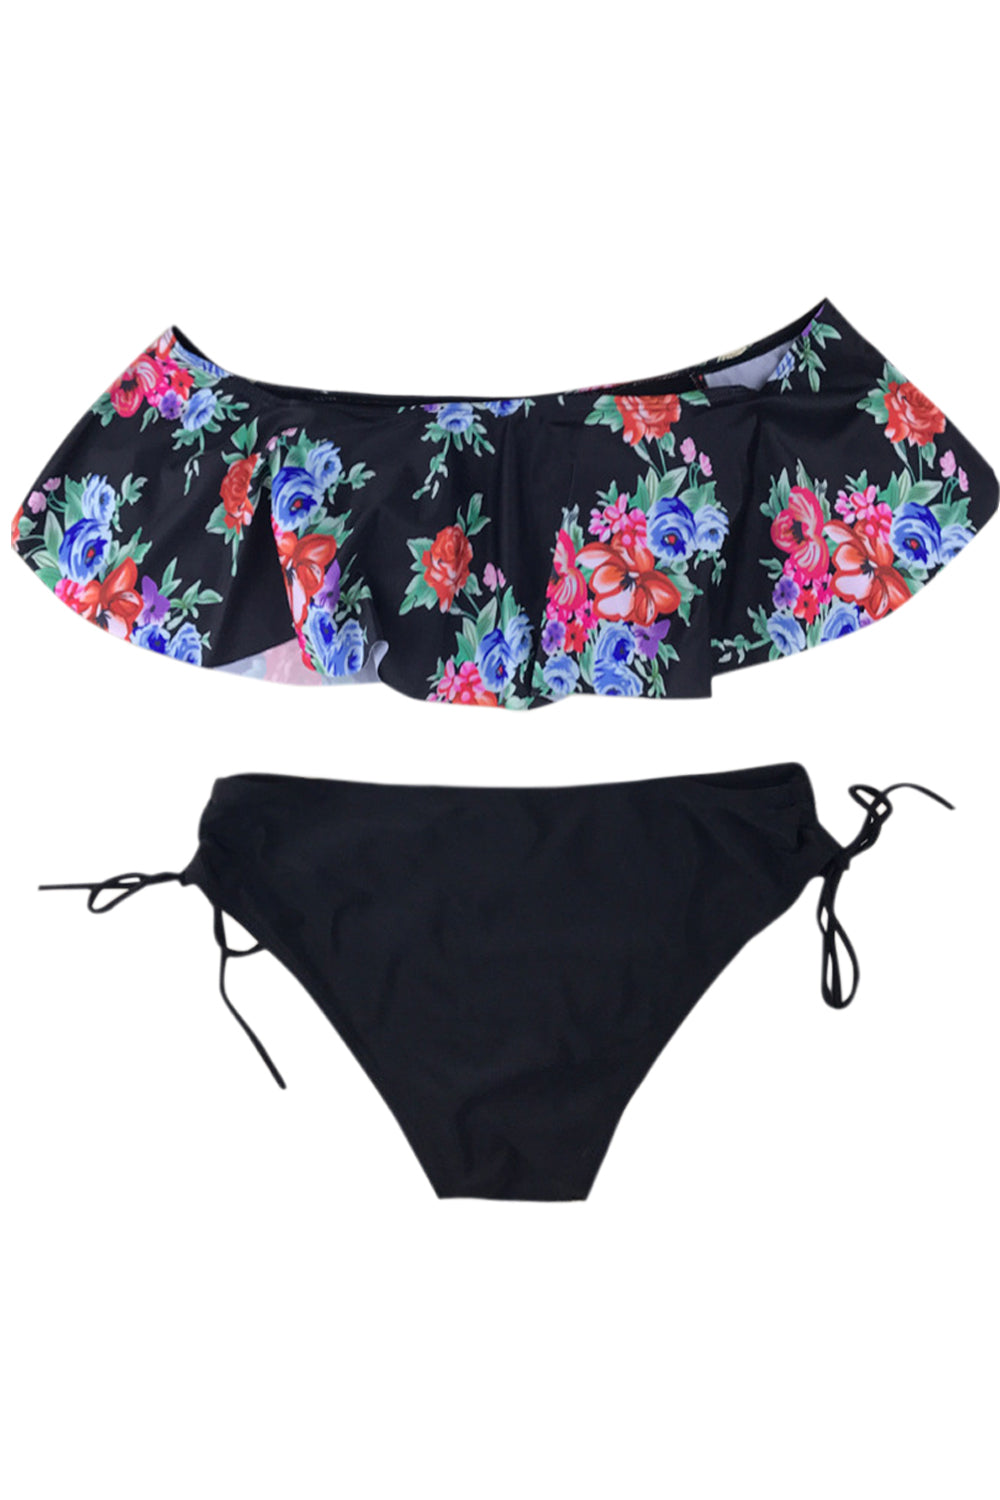 Iyasson Flower Printing Falbala Bikini Top With Black Ties at bottom sides